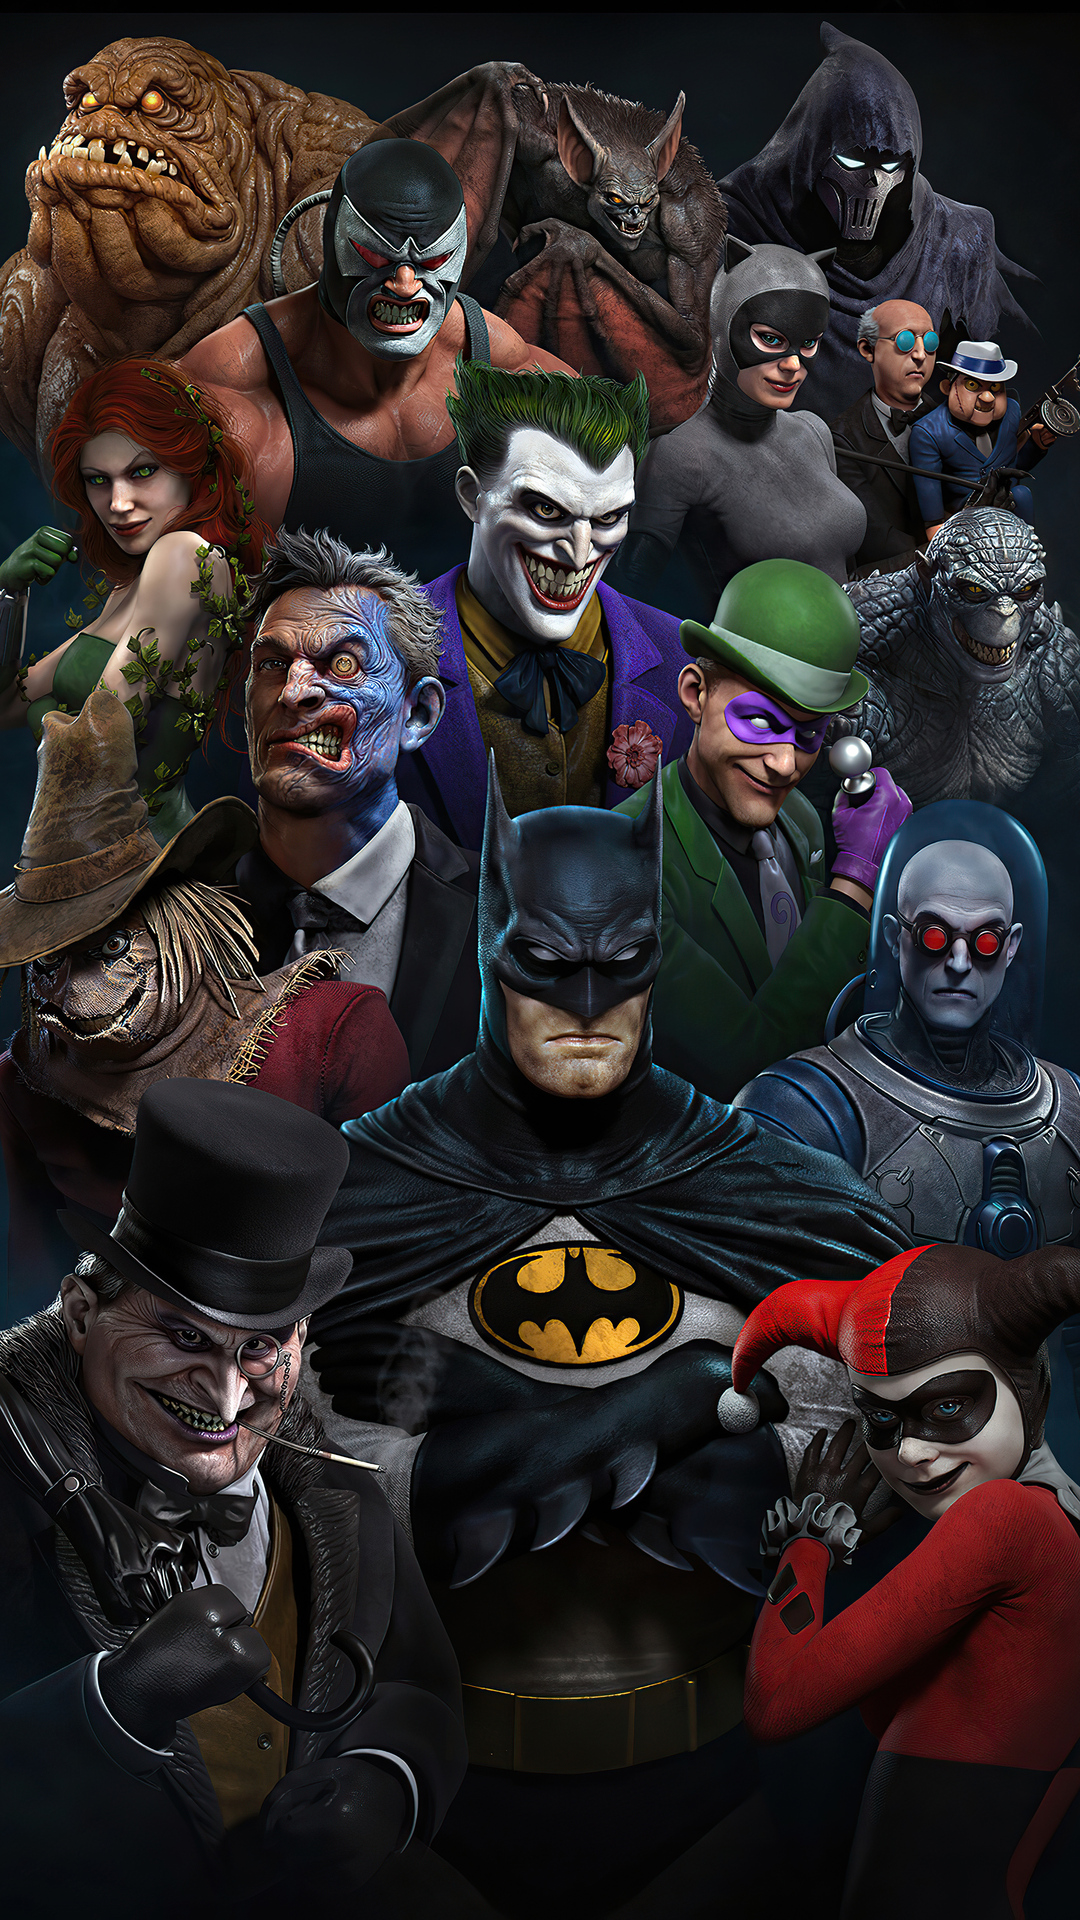 1080x1920 Batman The Animated Series Superheroes 4k Iphone 7,6s,6 Plus, Pixel xl ,One Plus 3,3t ...